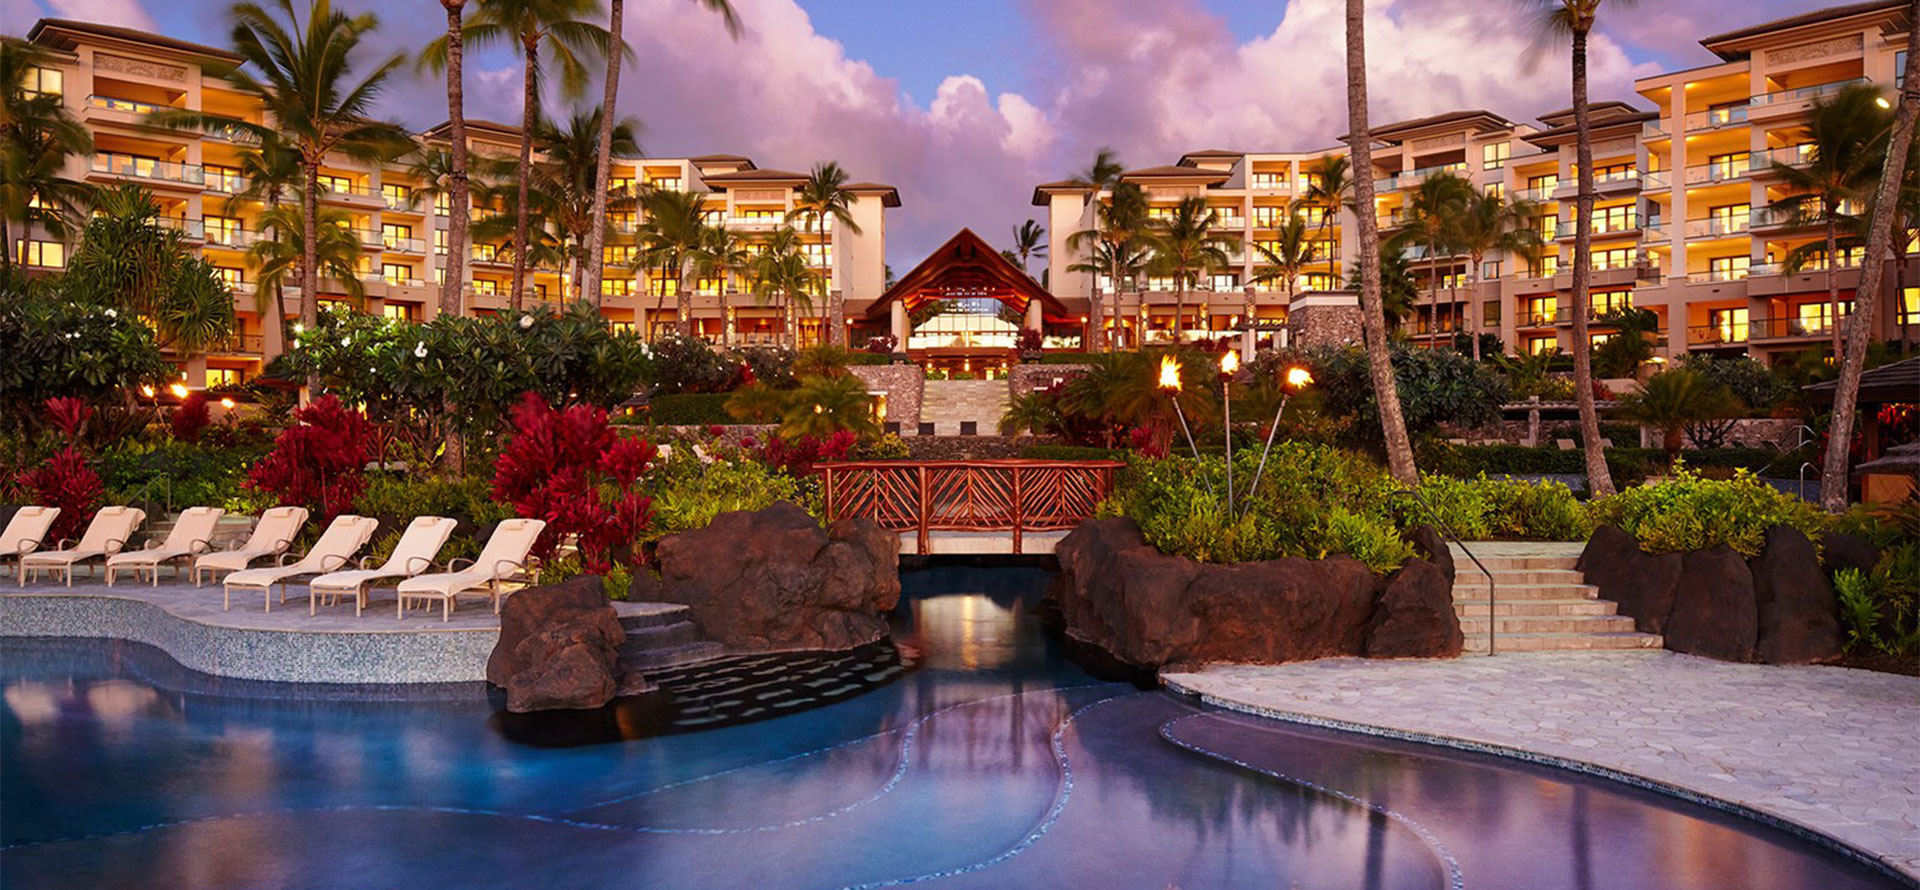 Luxury hotel in hawaii sunset.